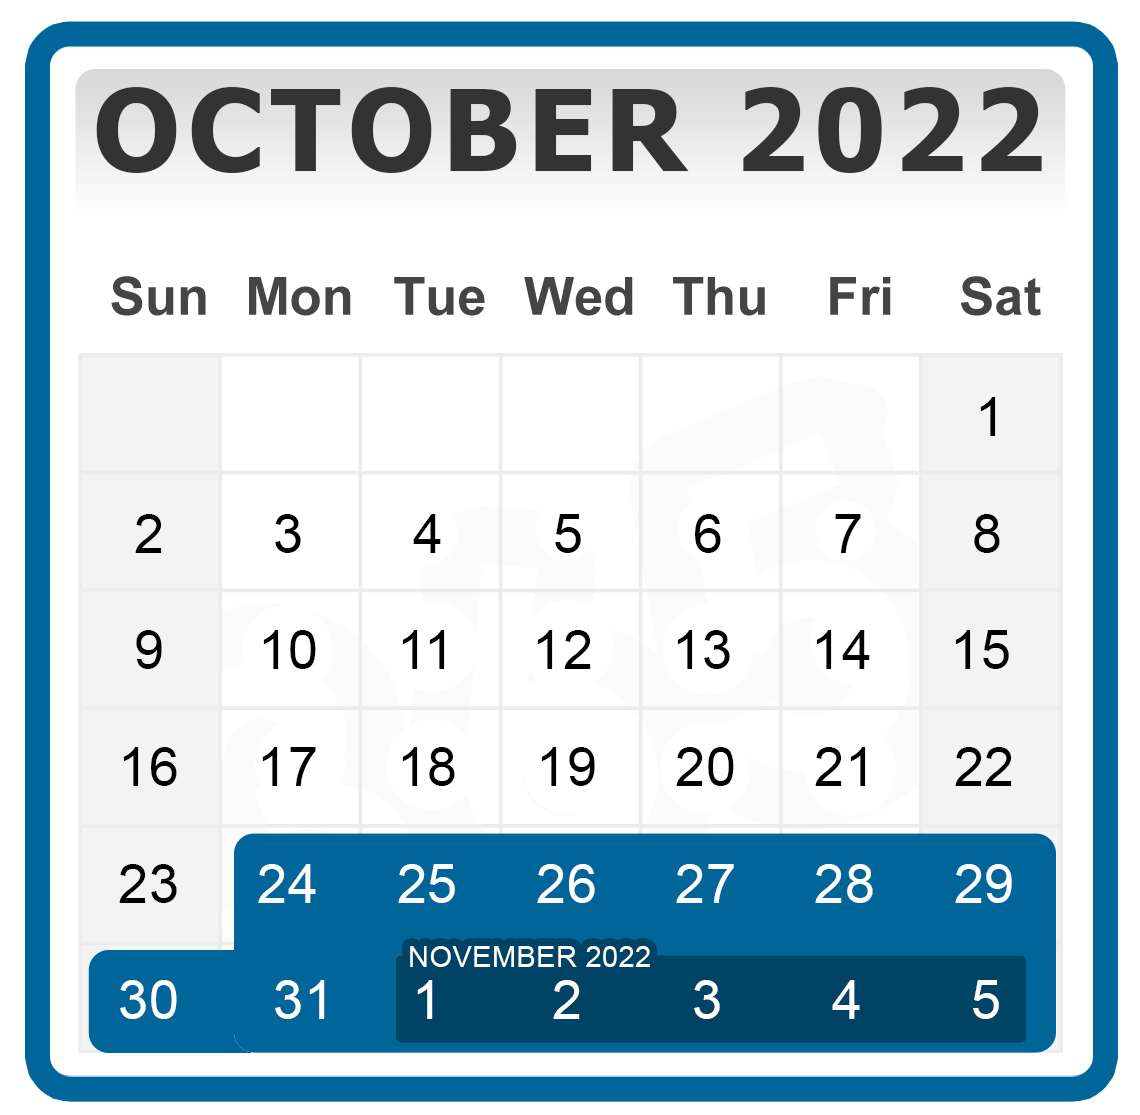 October and November 2022